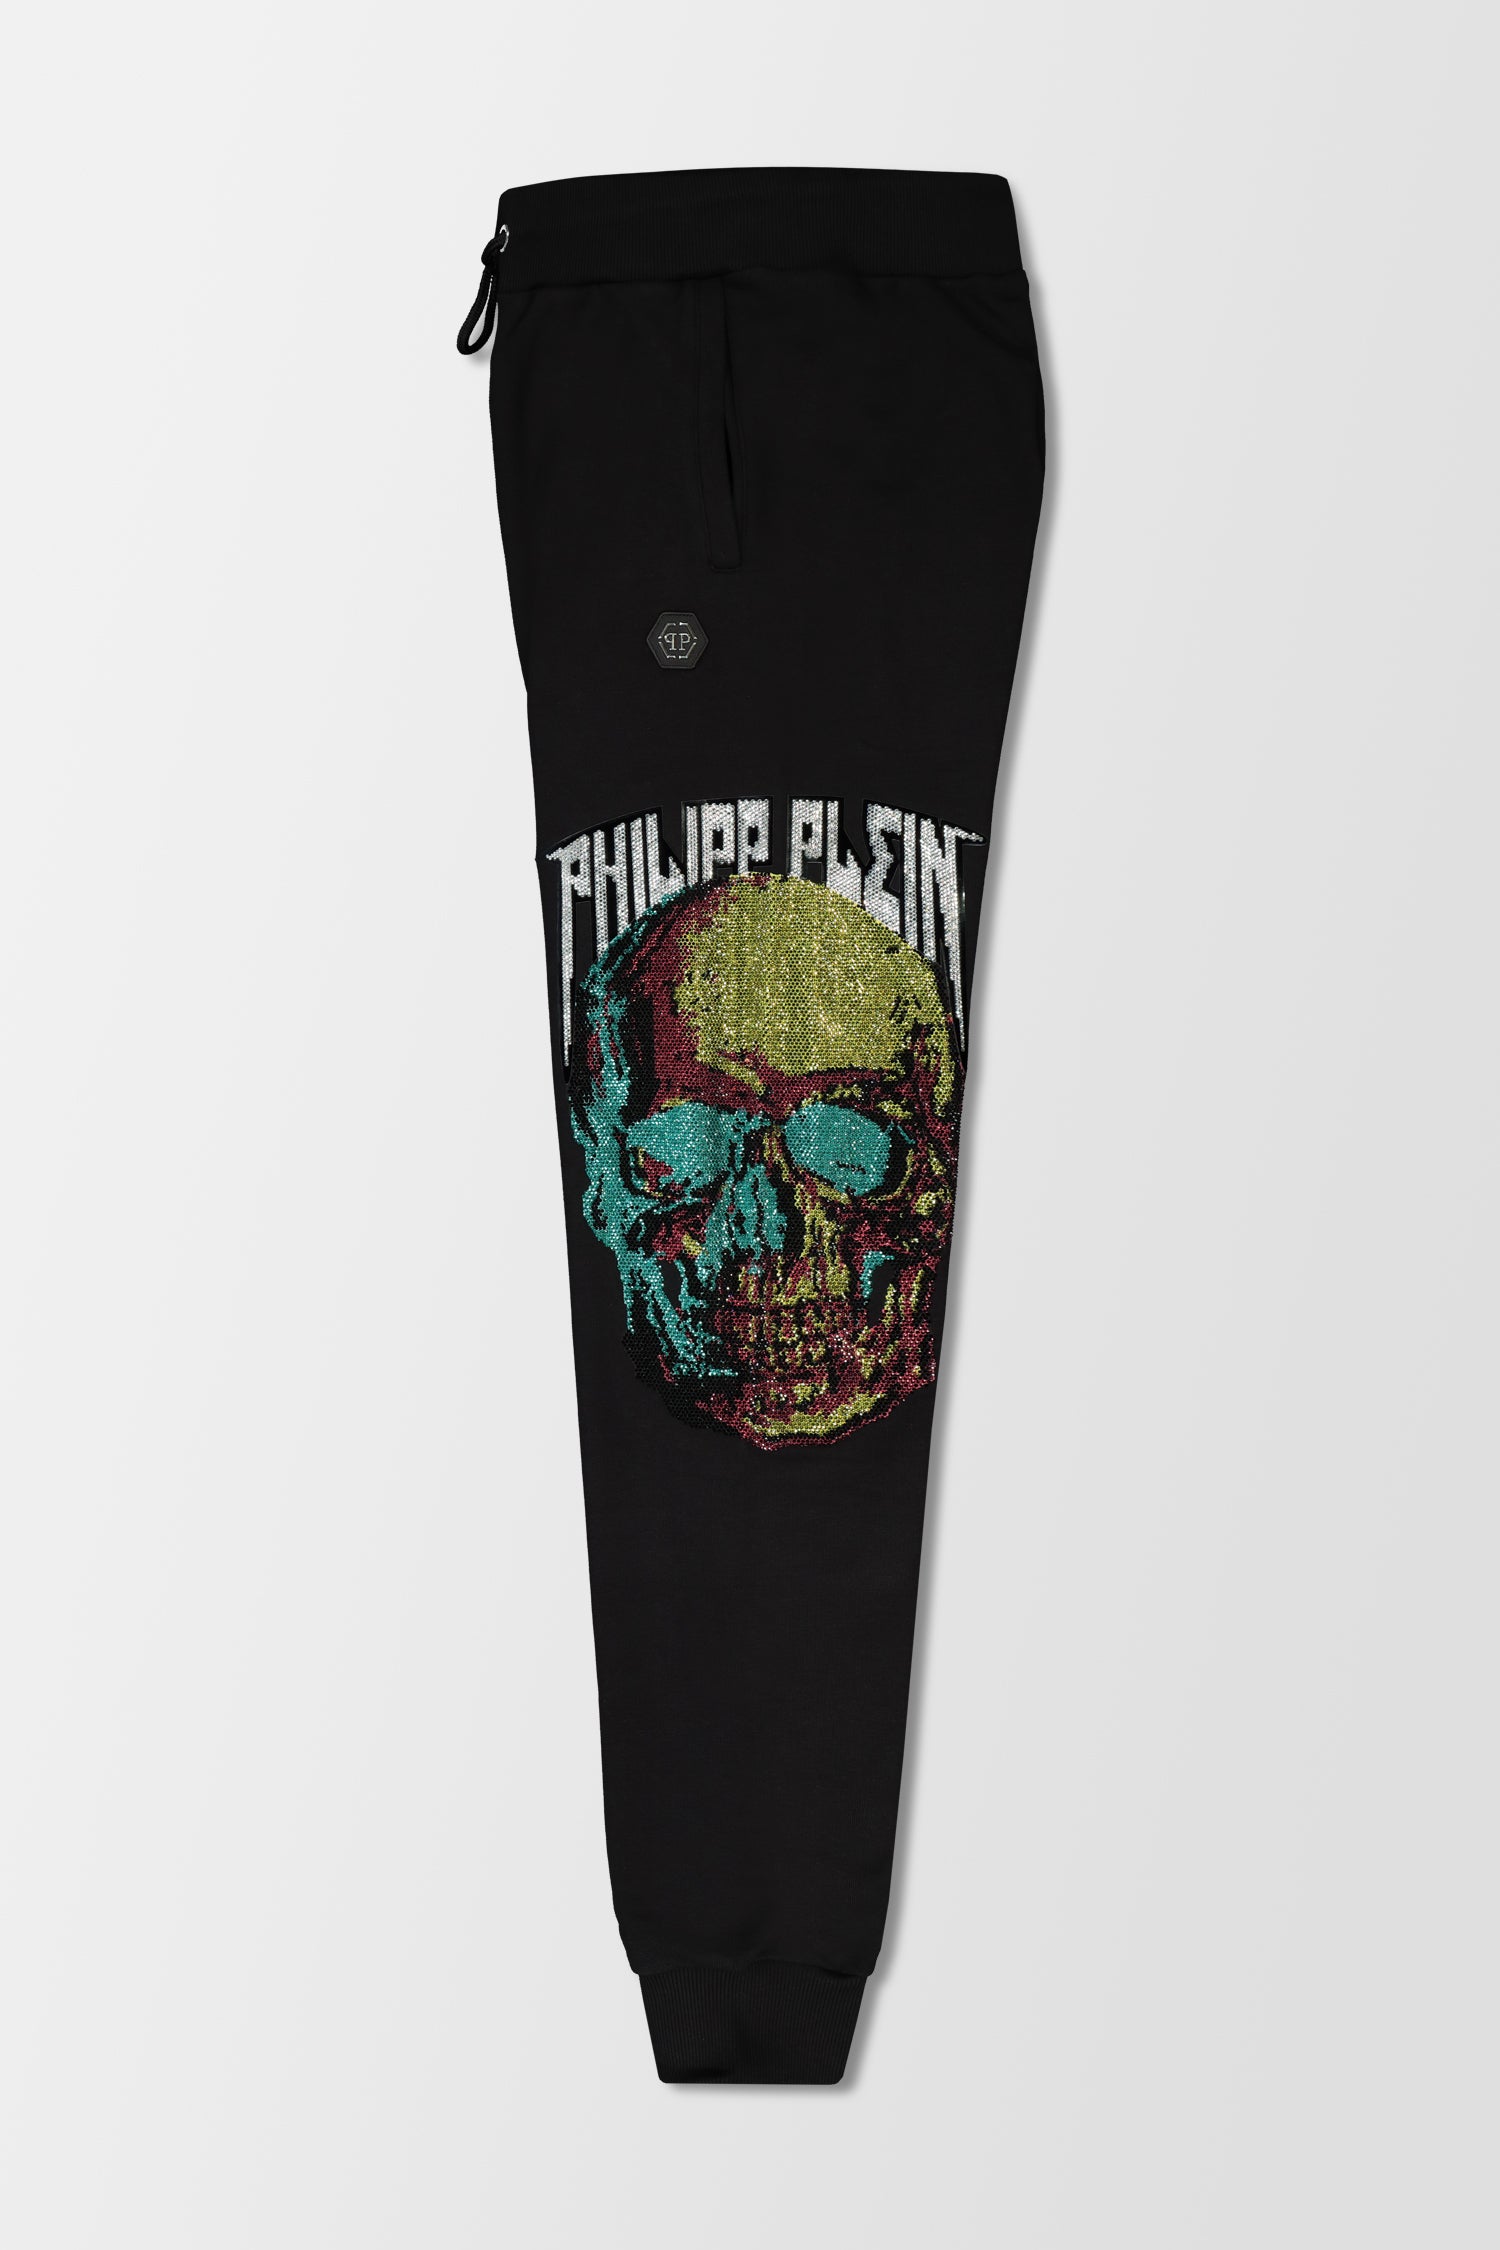 Philipp Plein Black Skull and Plein Jogging Trousers